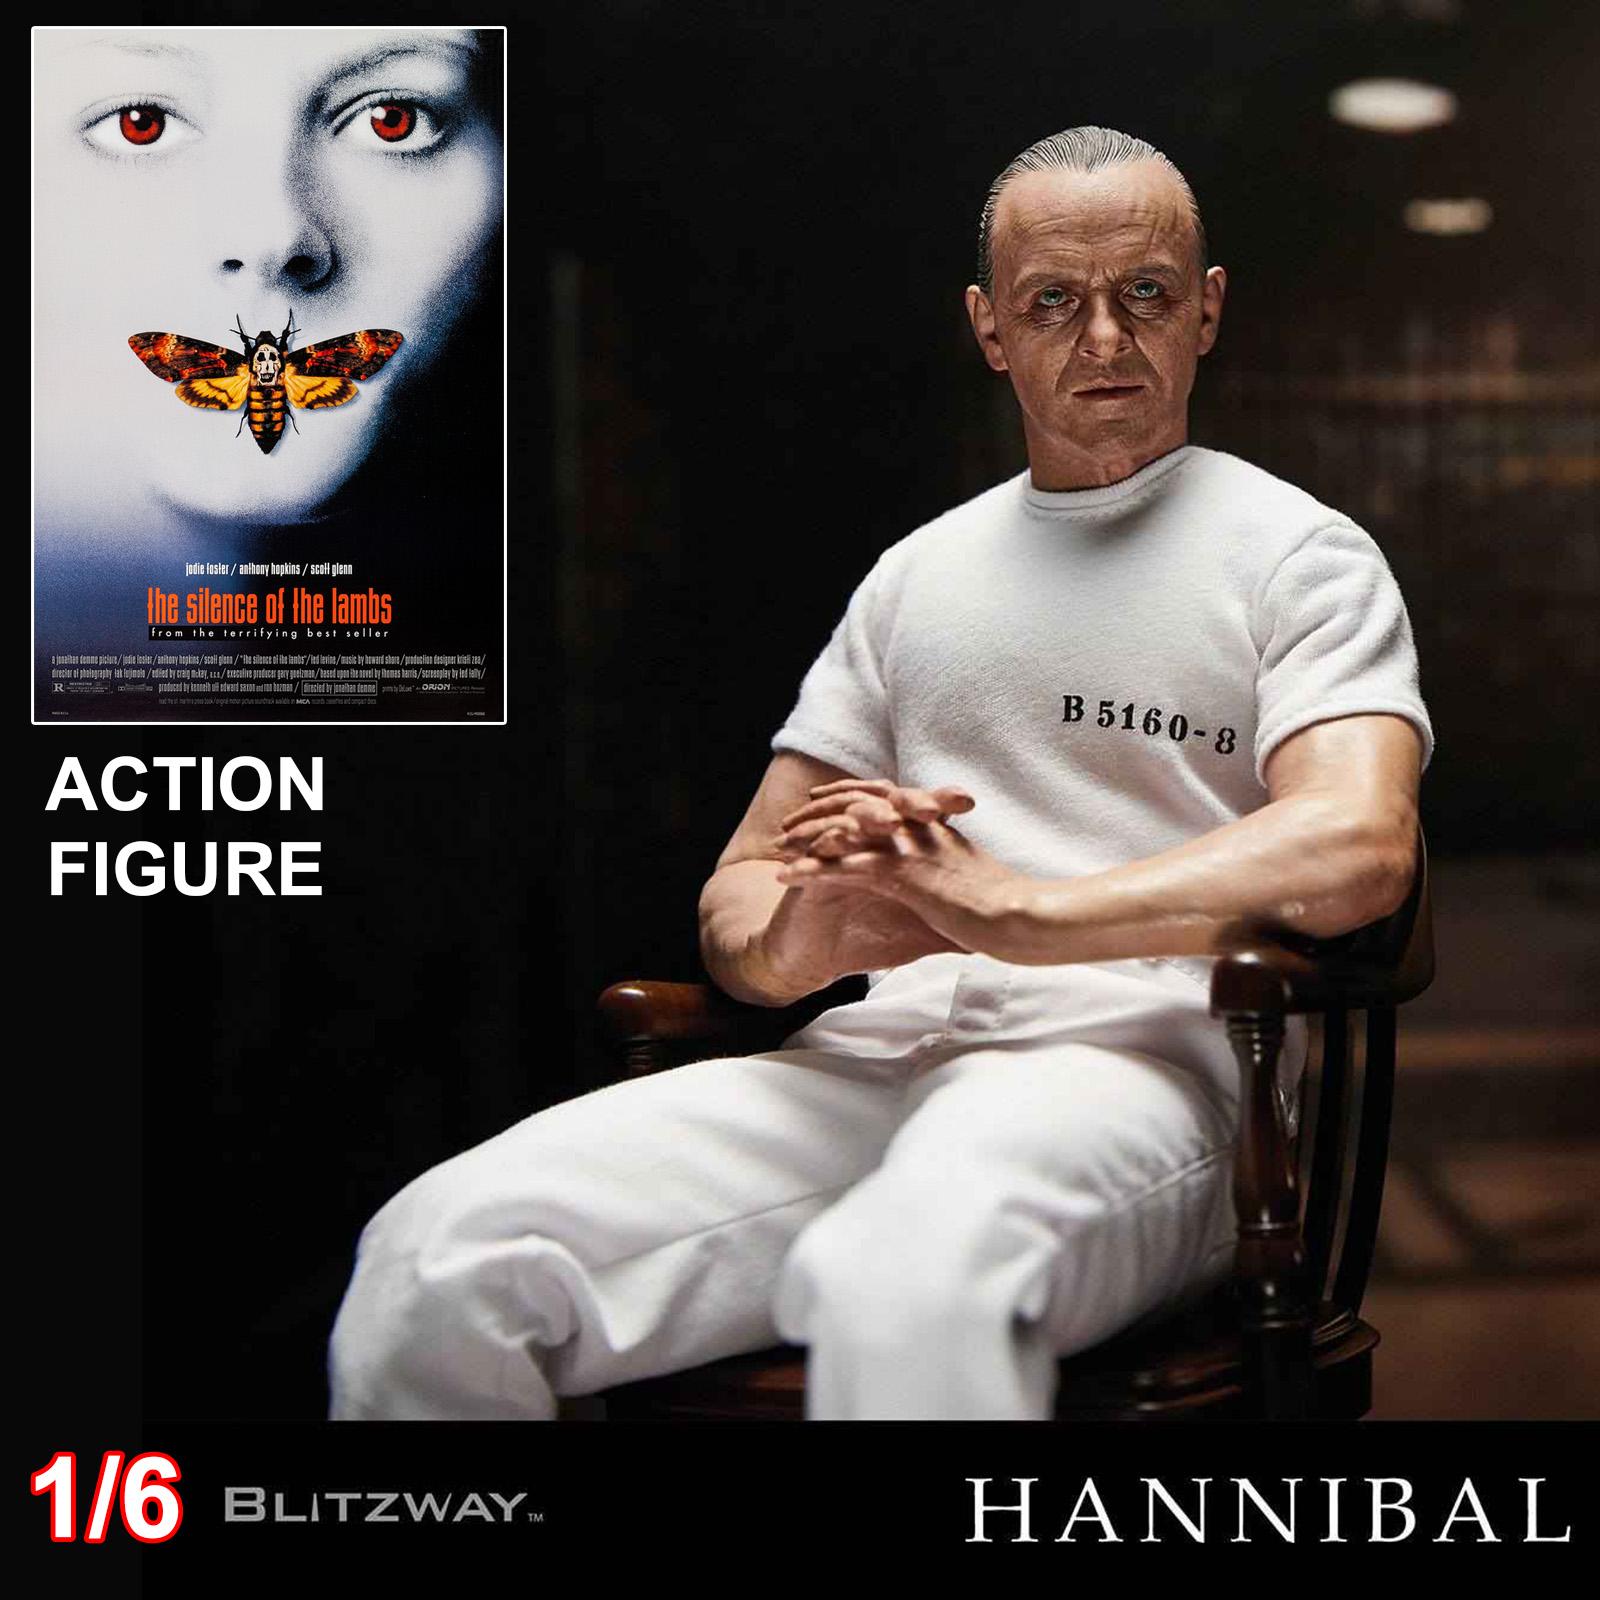 Hollywood COO Model โมเดล Hot Toys จาก The Silence of the Lambs 1991 อํามหิตไม่เงียบ Hannibal Lecter ฮันนิบาล เล็กเตอร์ Anthony Hopkins แอนโทนี ฮ็อปกินส์ แต่งครบ Ver 1/6 จากฮอลลีวูด Figure Action แอ็คชั่น ฟิกเกอร์ Figma ฟิกม่า ขยับได้ manga ของขวัญ Gift